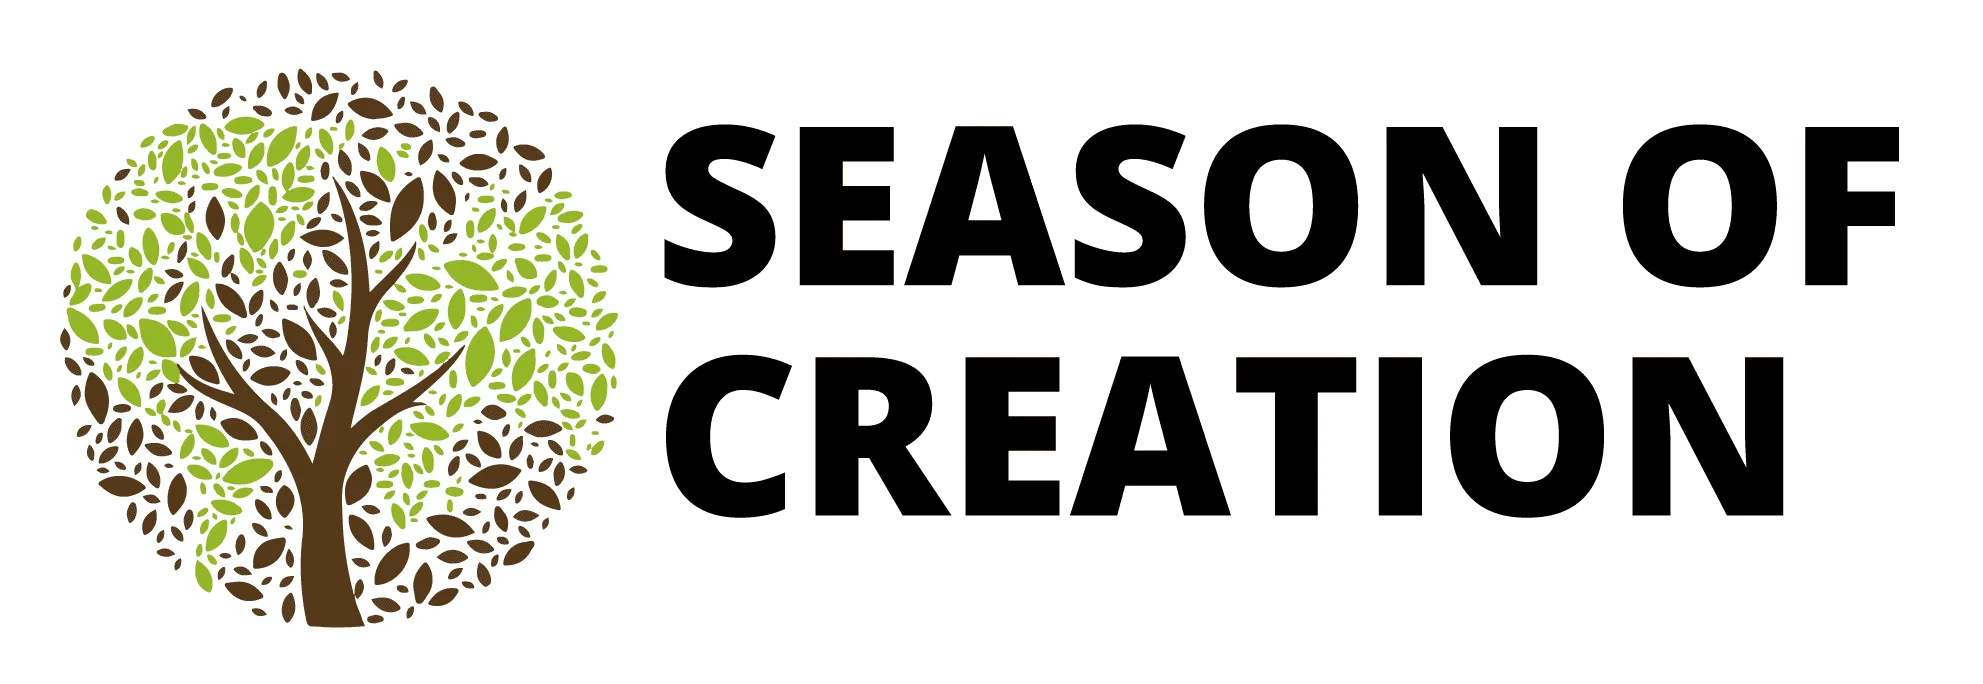 Celebrate the Season of Creation